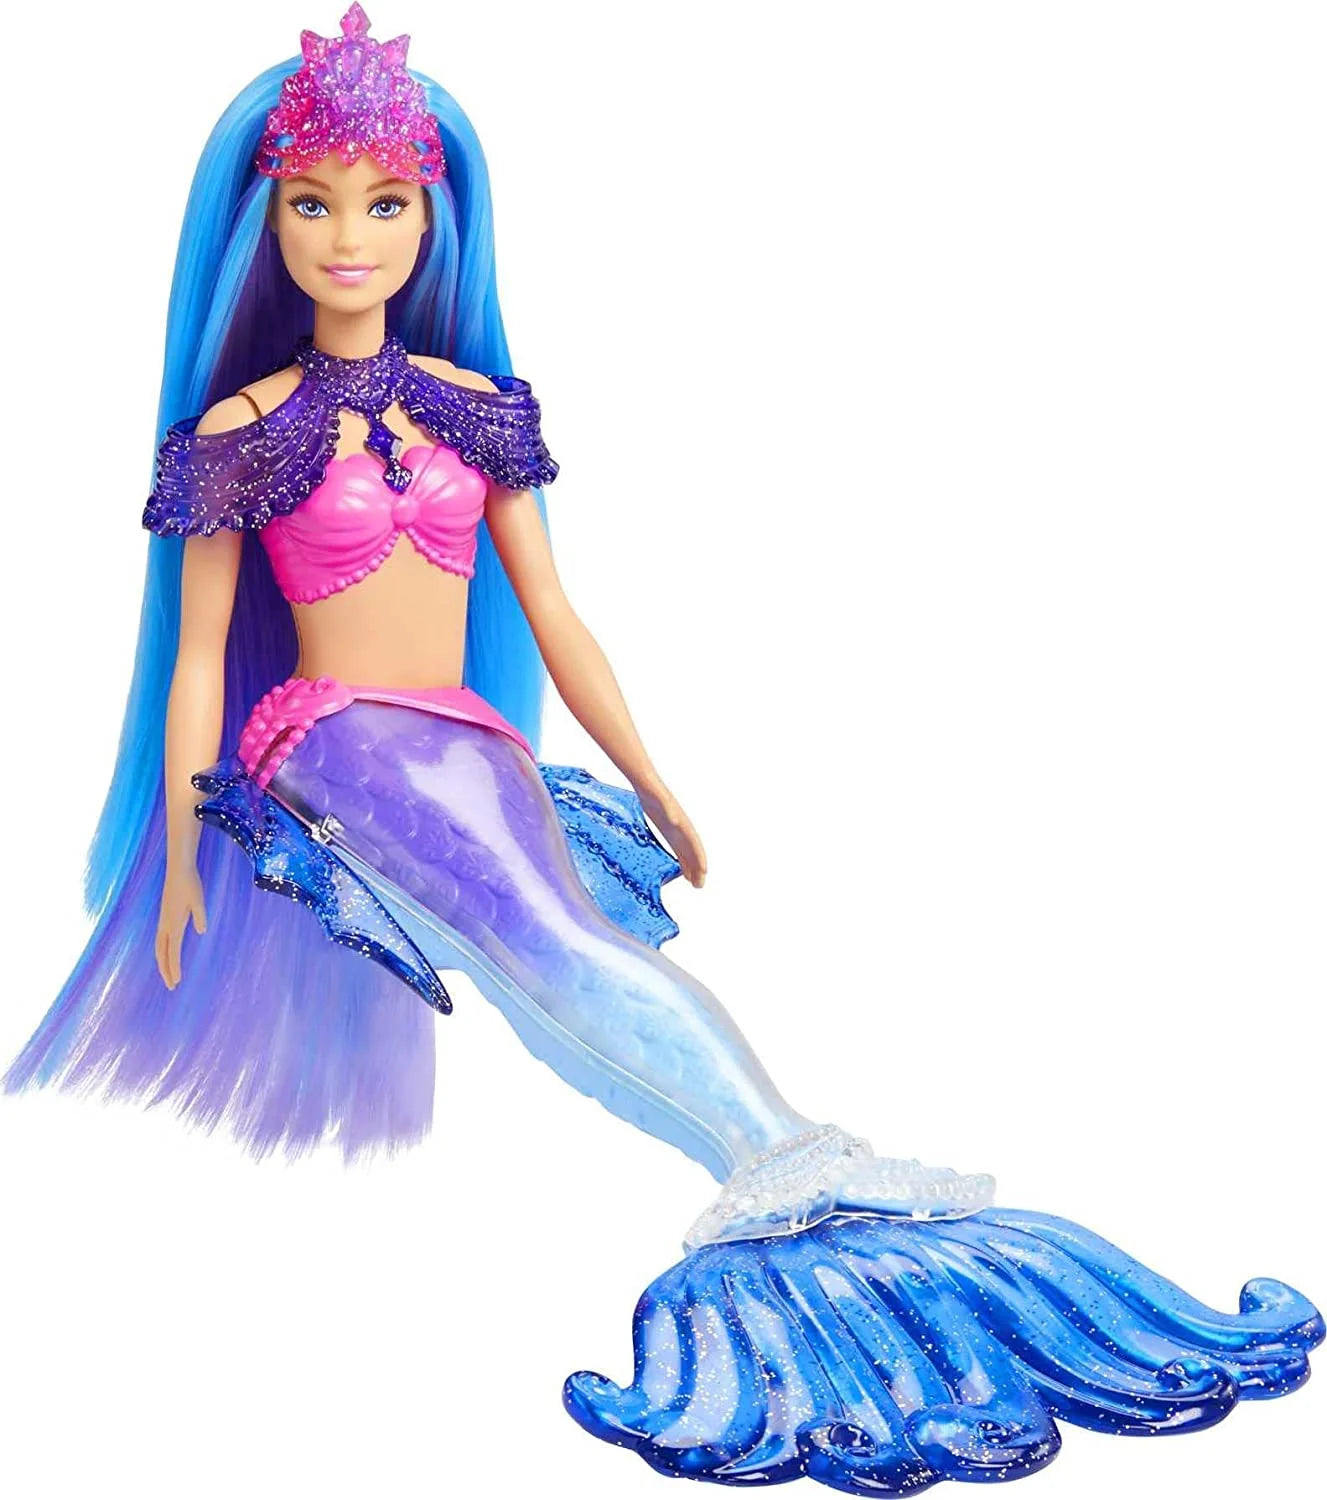 Barbie Malibu Roberts Mermaid Power Doll